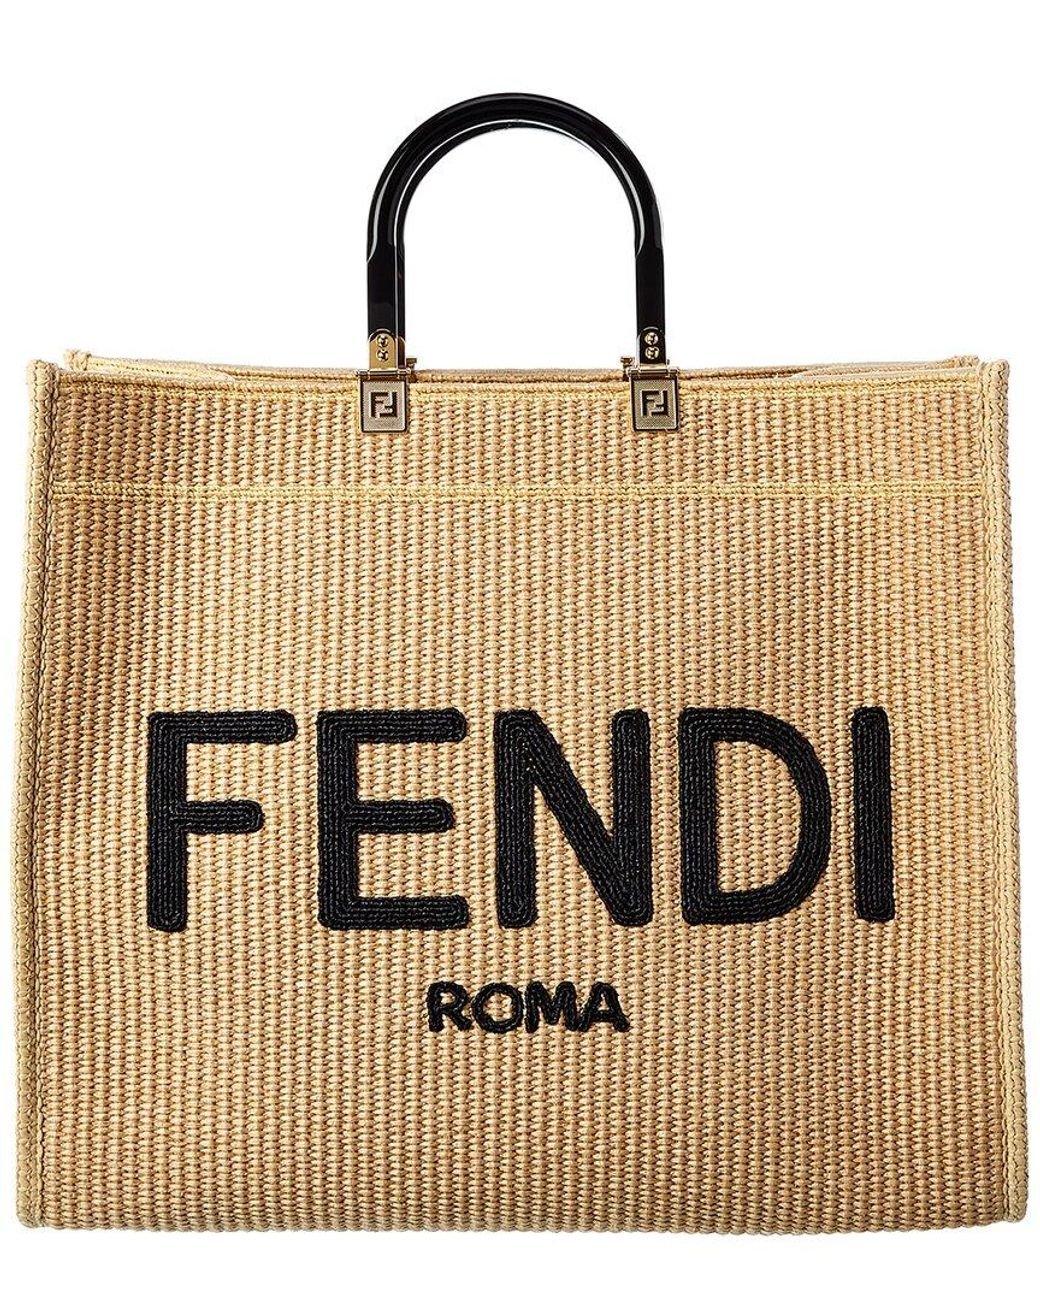 Straw Bags Are In And I Love This Fendi Sunshine Shopper - PurseBlog